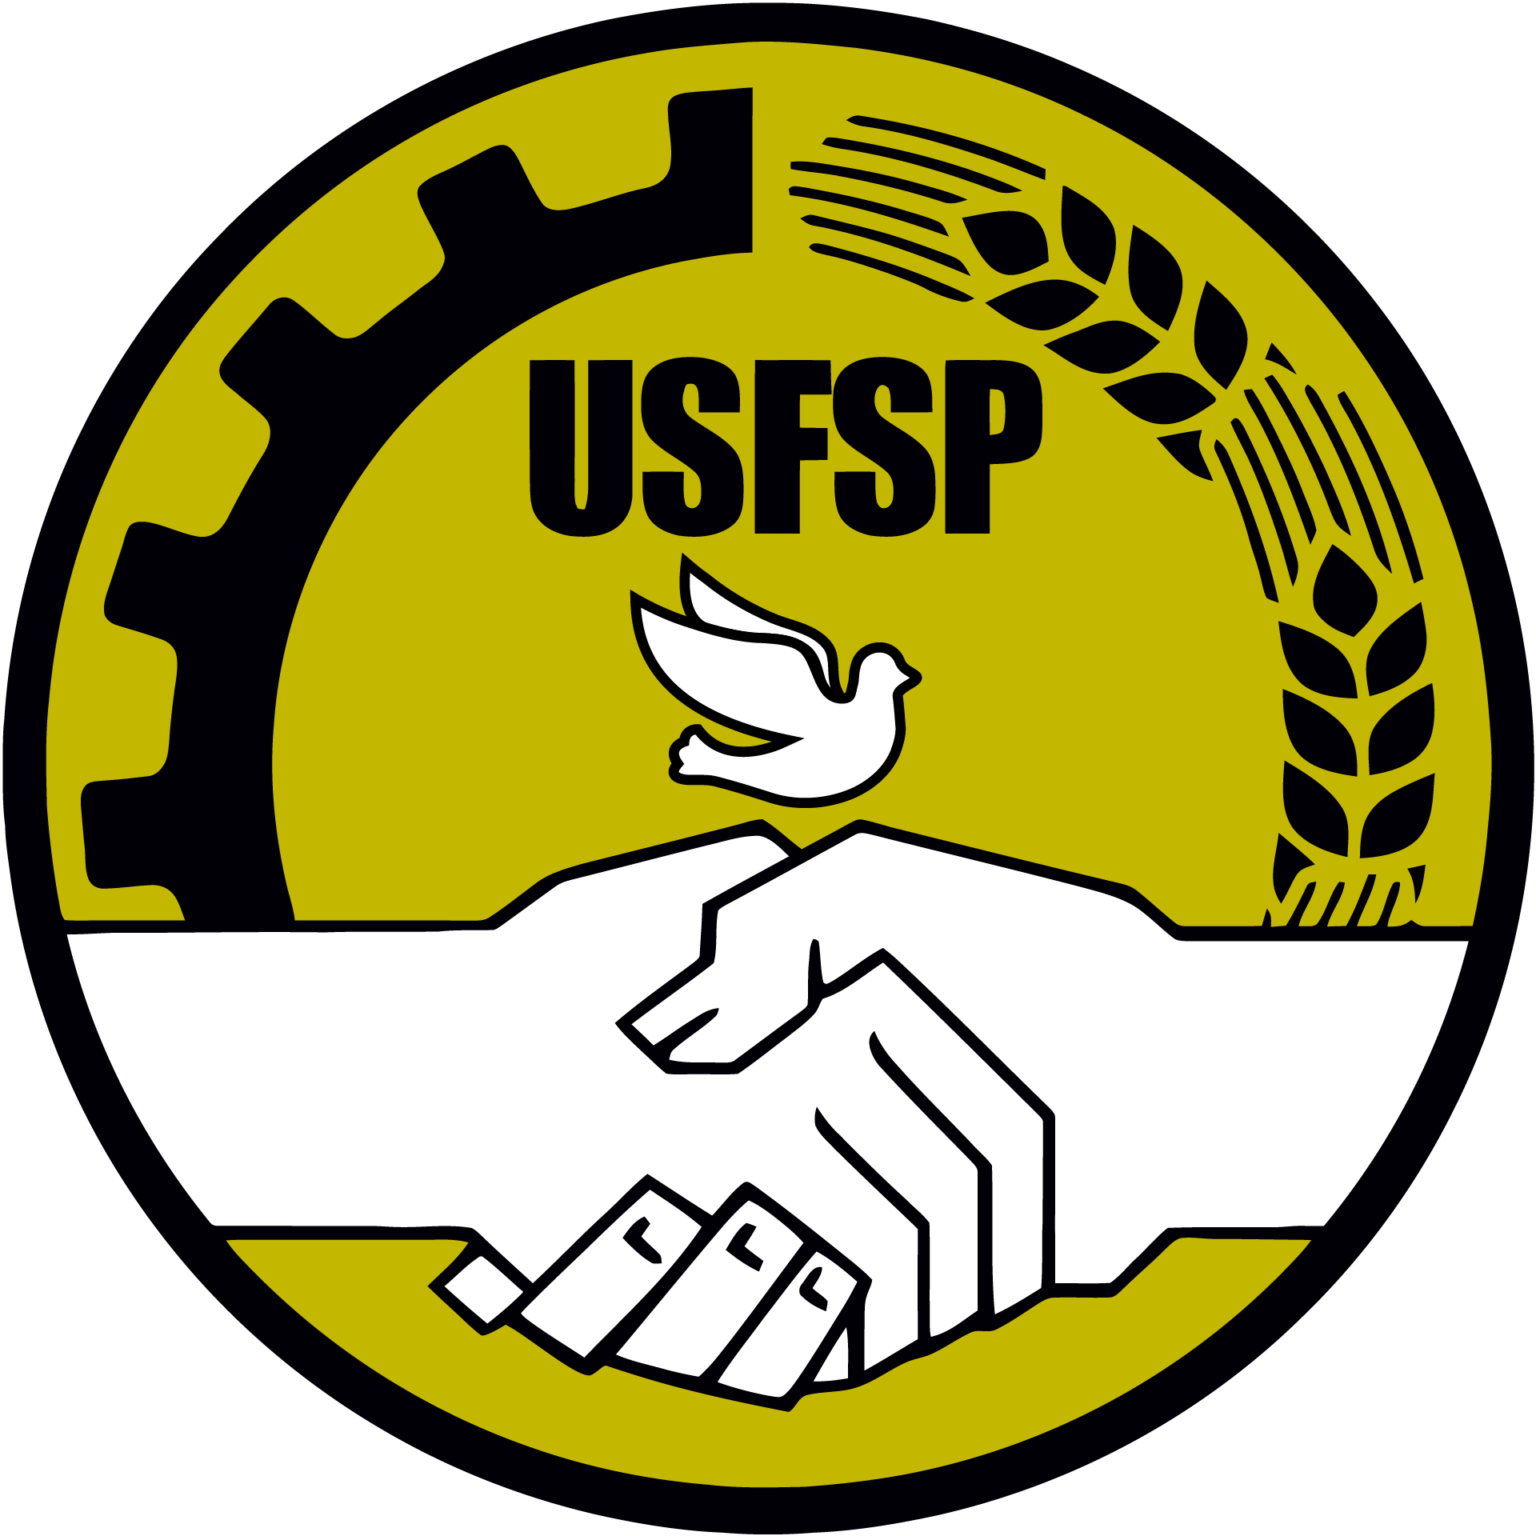 File:USFSP.png